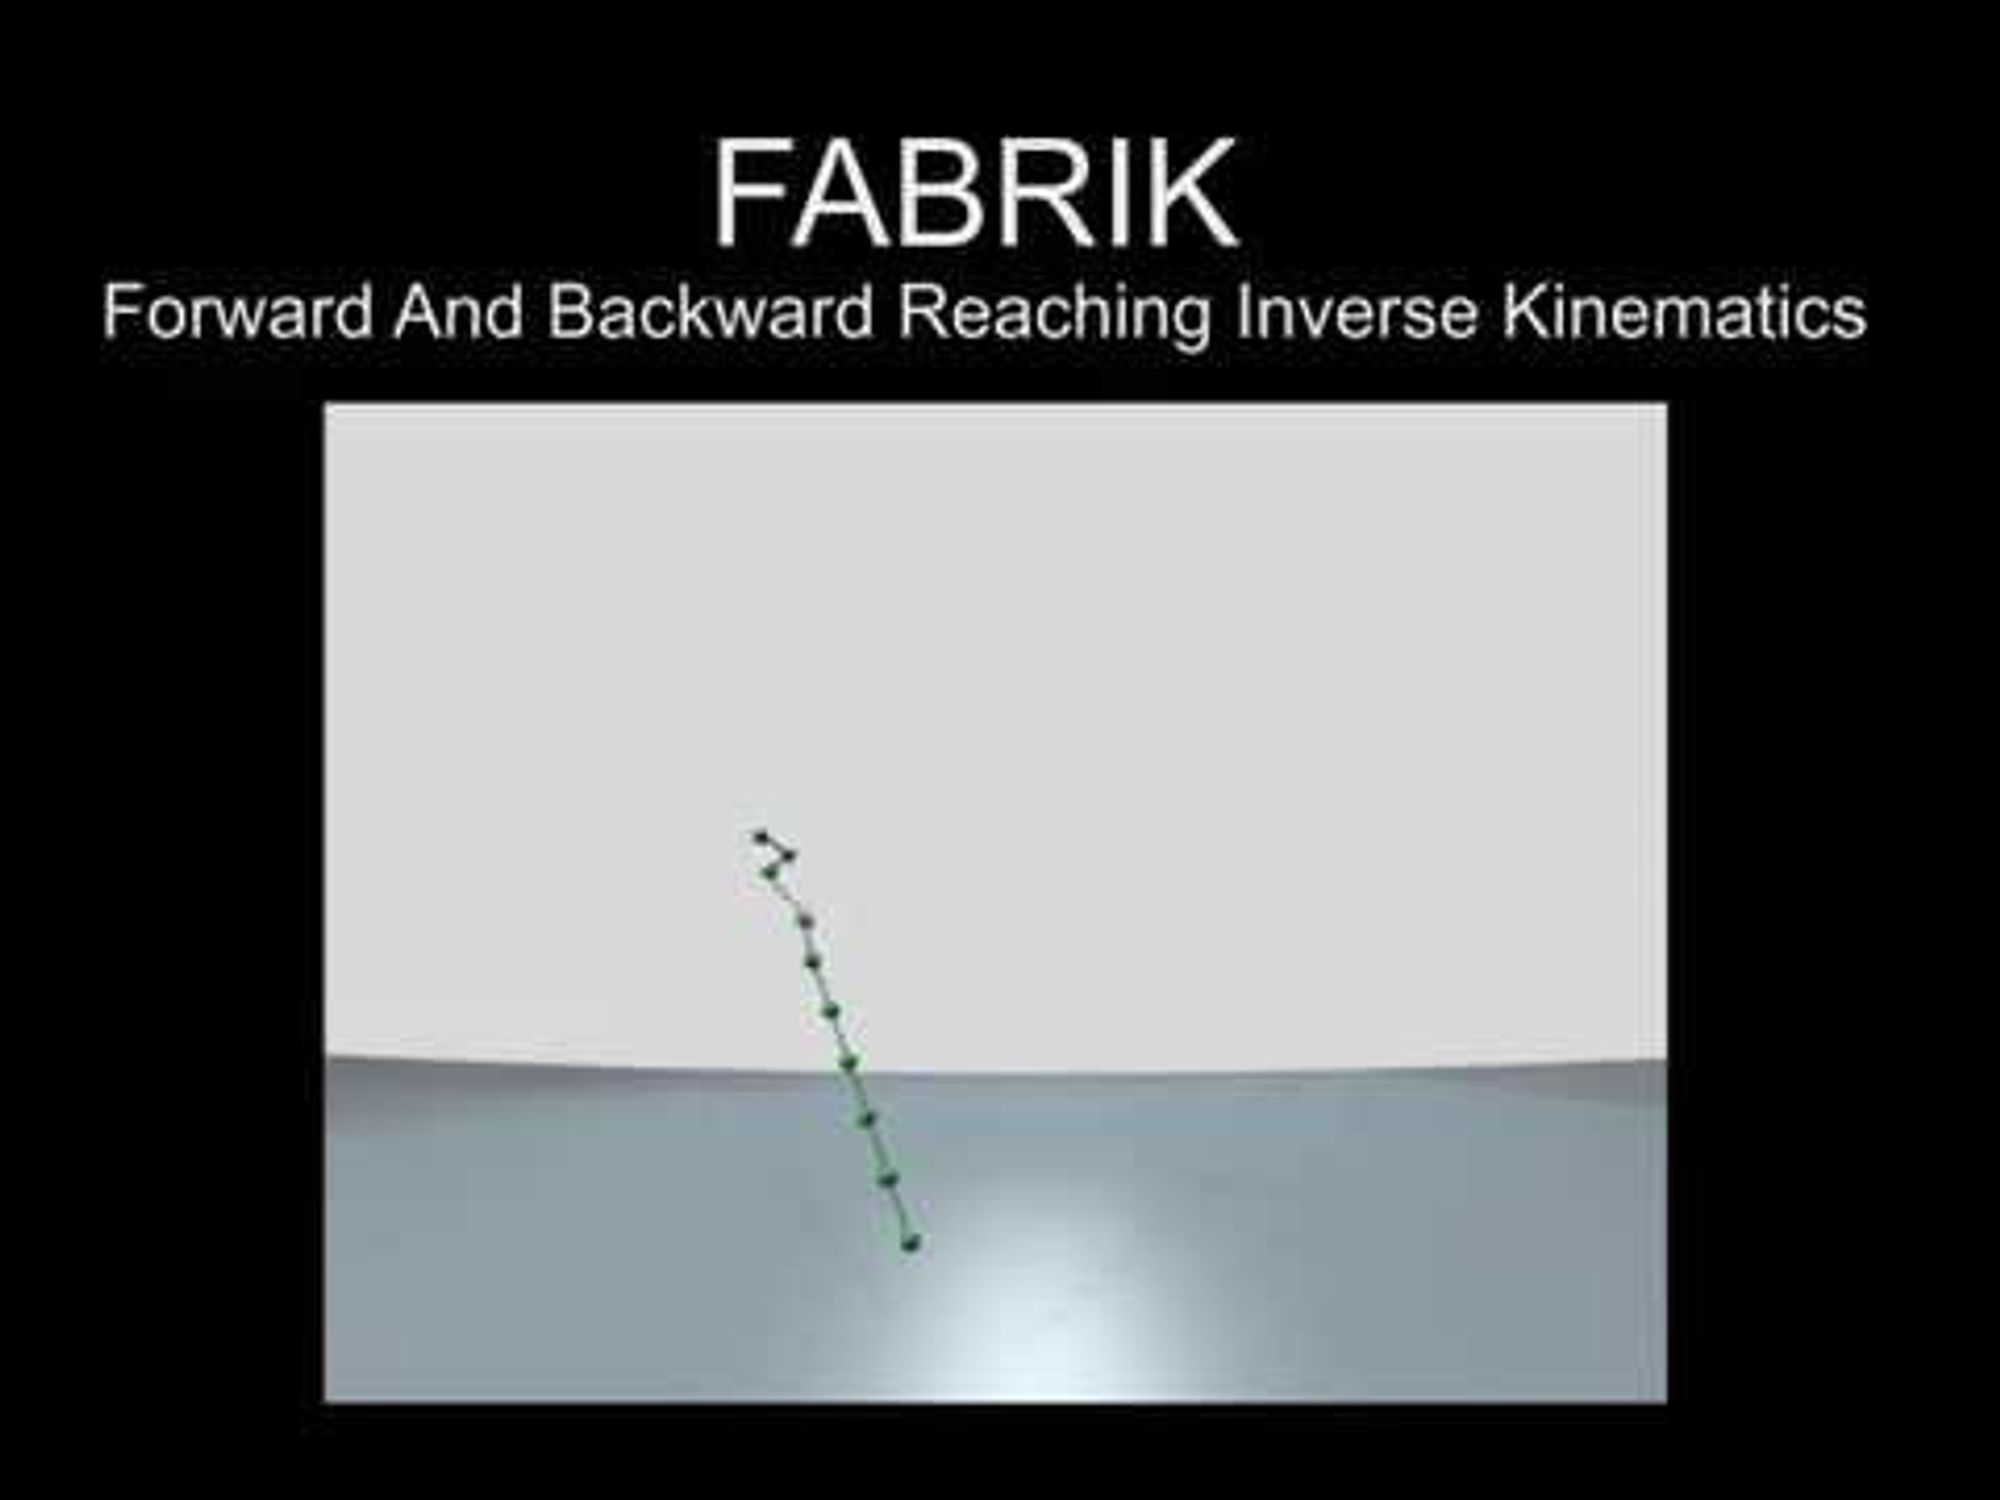 Forward And Backward Reaching Inverse Kinematics (FABRIK)